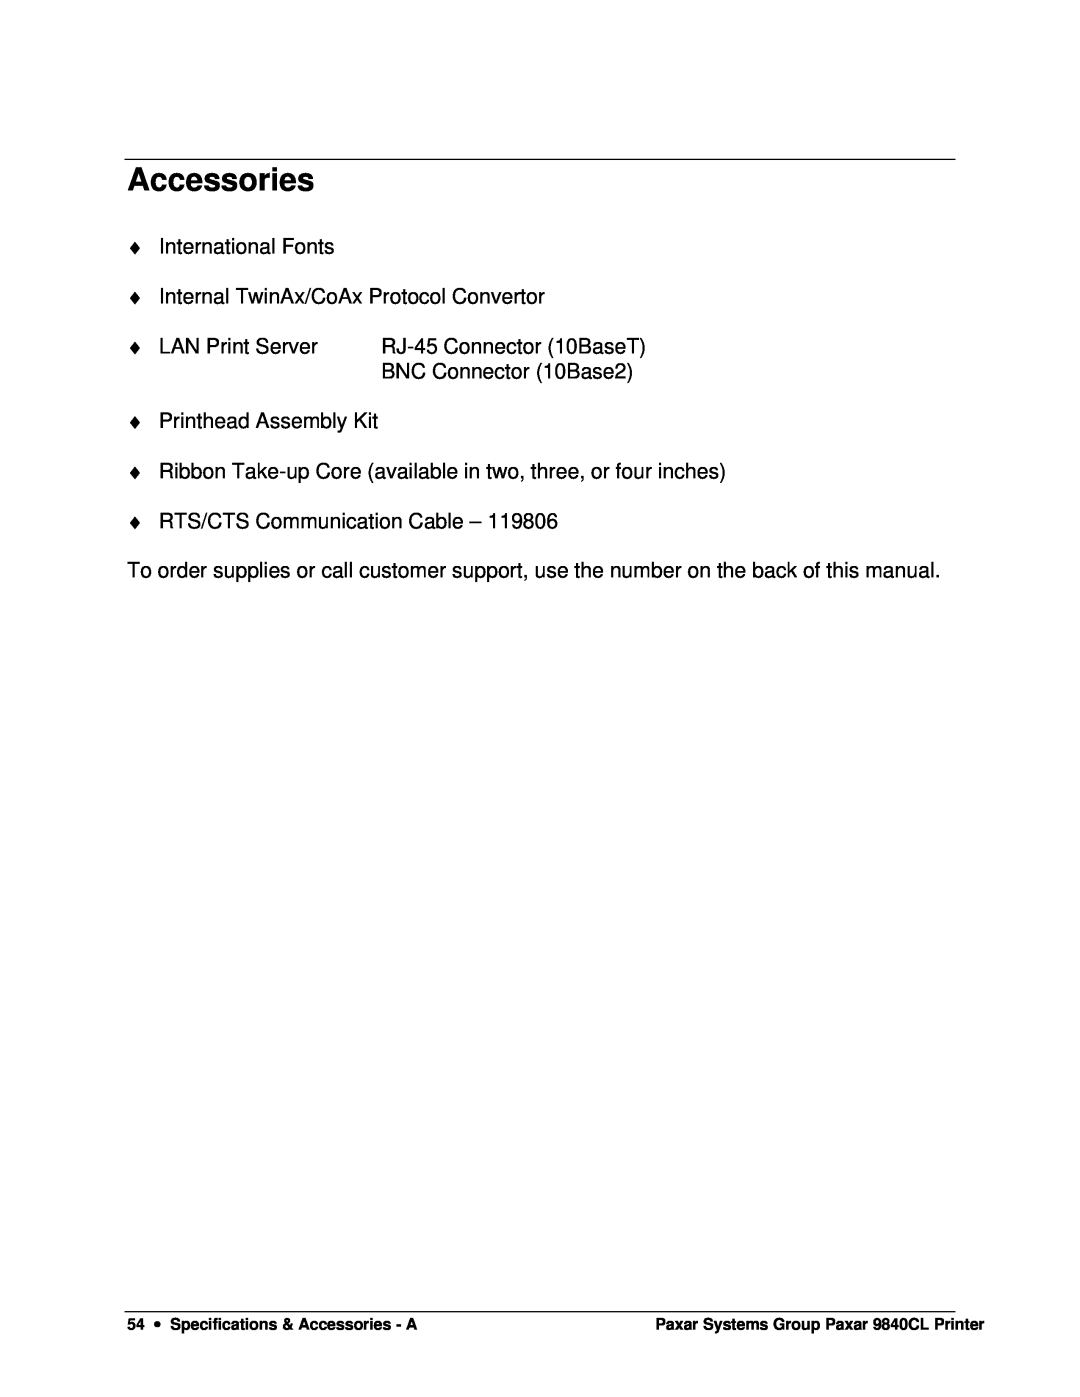 Paxar 9840CL user manual Accessories, International Fonts Internal TwinAx/CoAx Protocol Convertor, LAN Print Server 